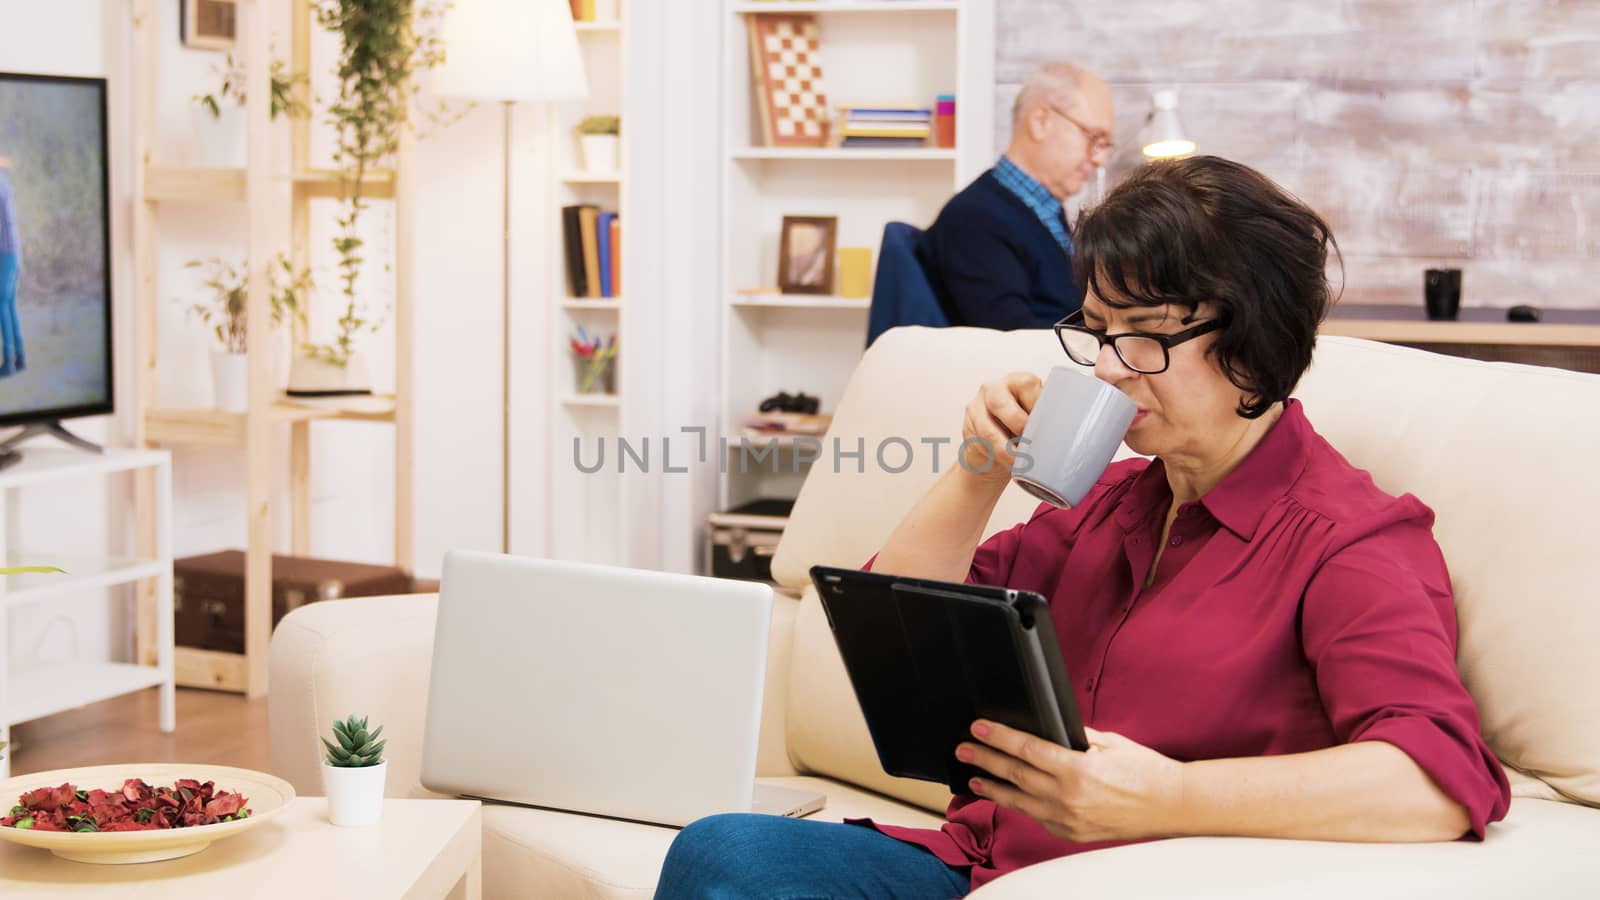 Zoom in shot of elderly age woman using tablet by DCStudio